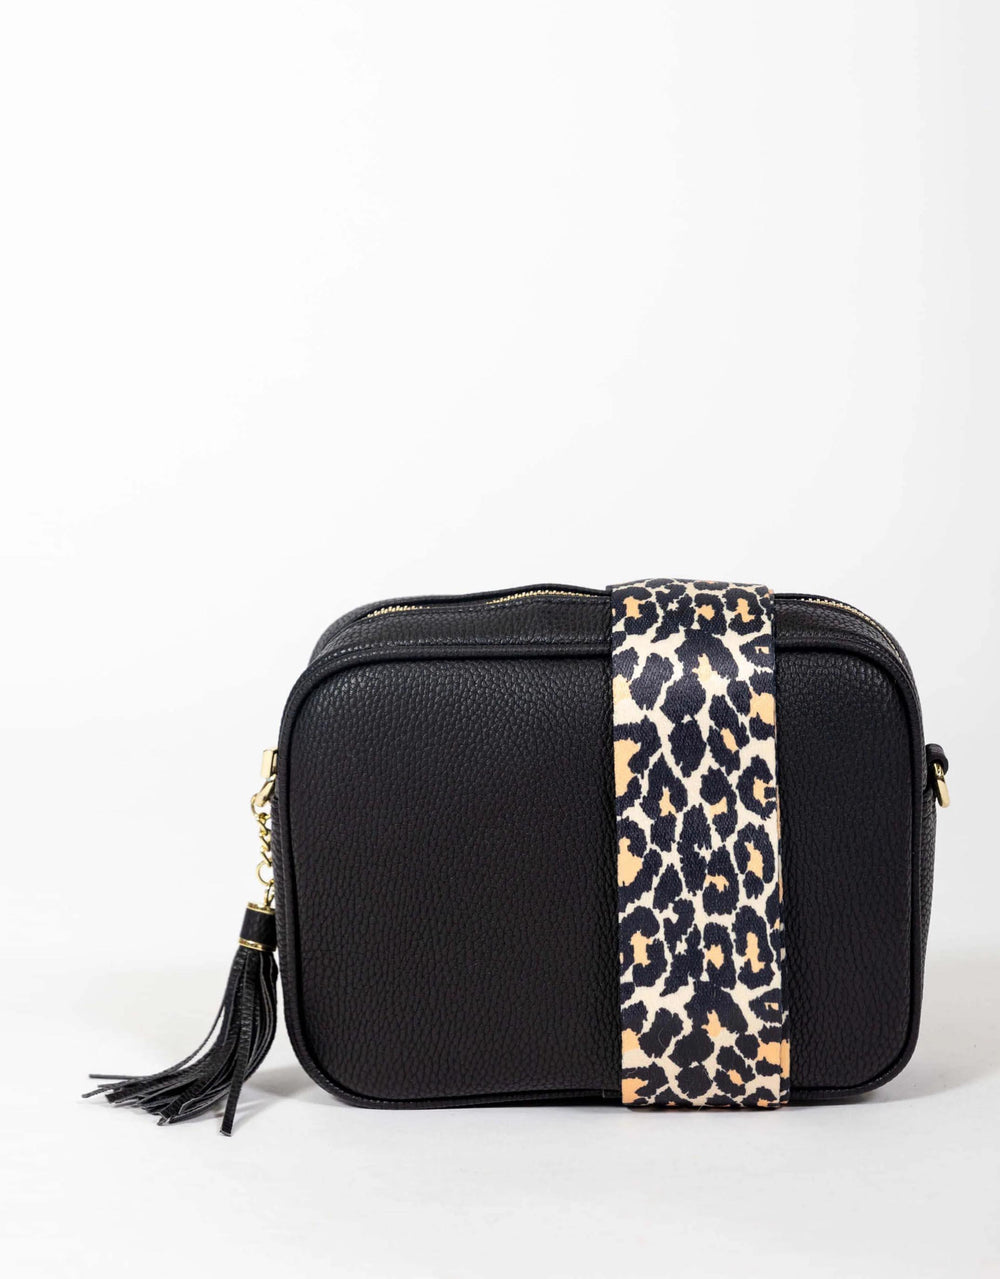 White & Co. - Zoe Crossbody Bag - Black/Leopard - White & Co Living Accessories